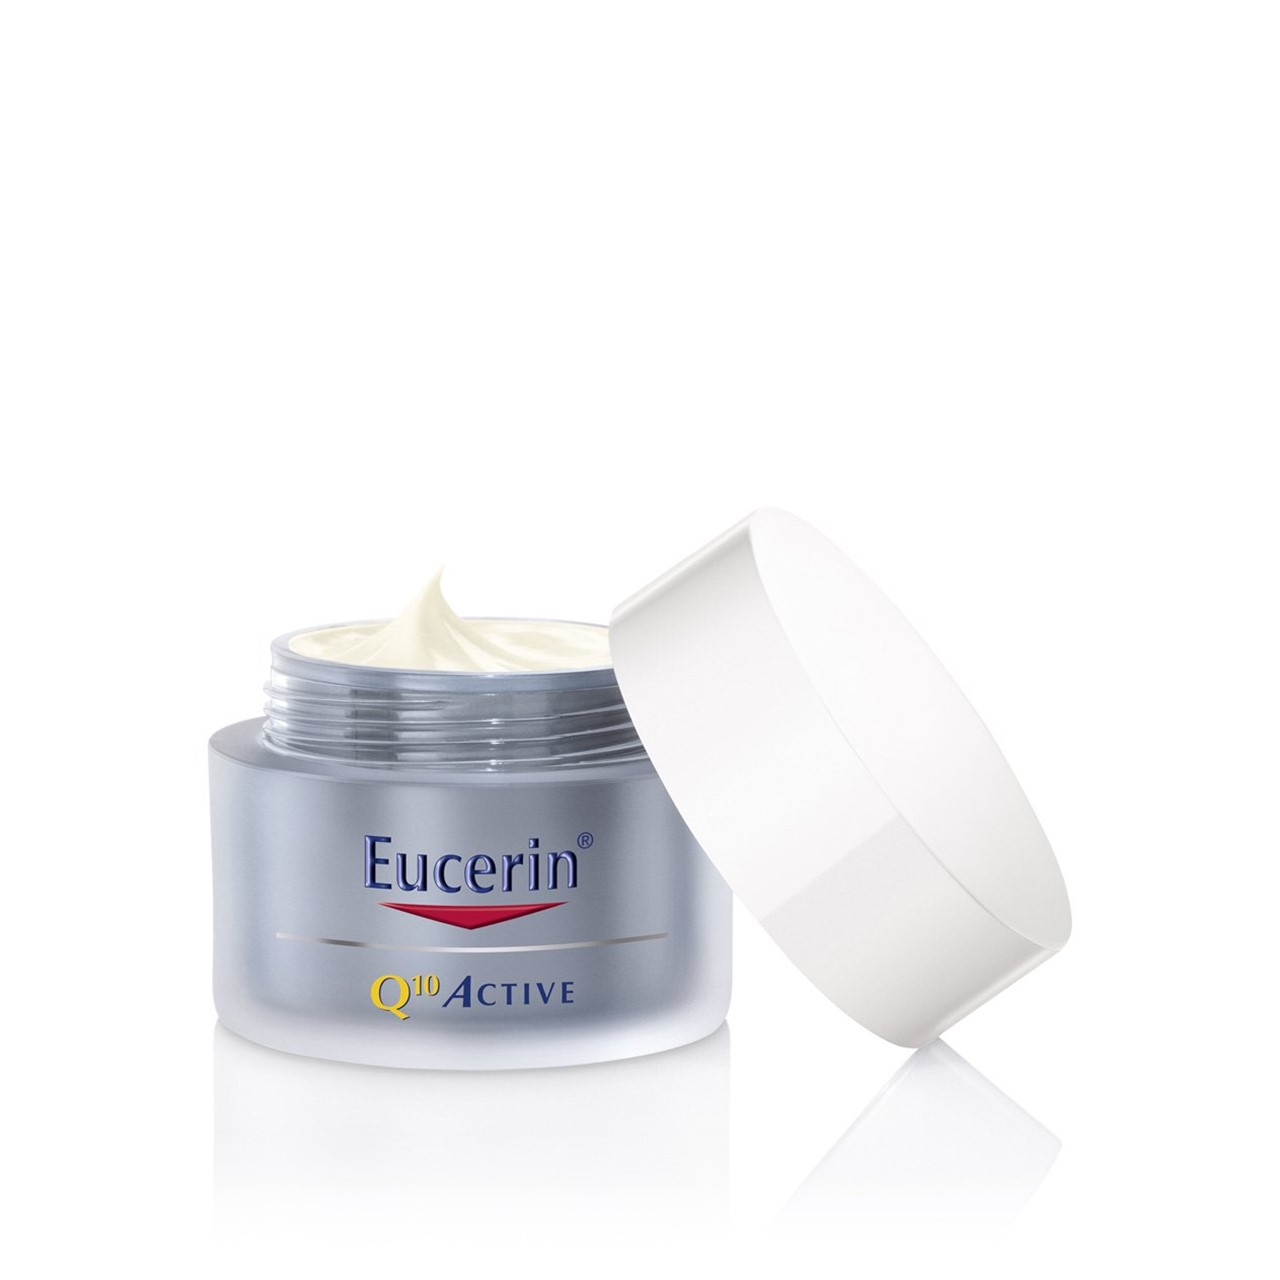 Eucerin Q10 Active Anti-Wrinkle Night Cream 50ml (1.69fl oz)